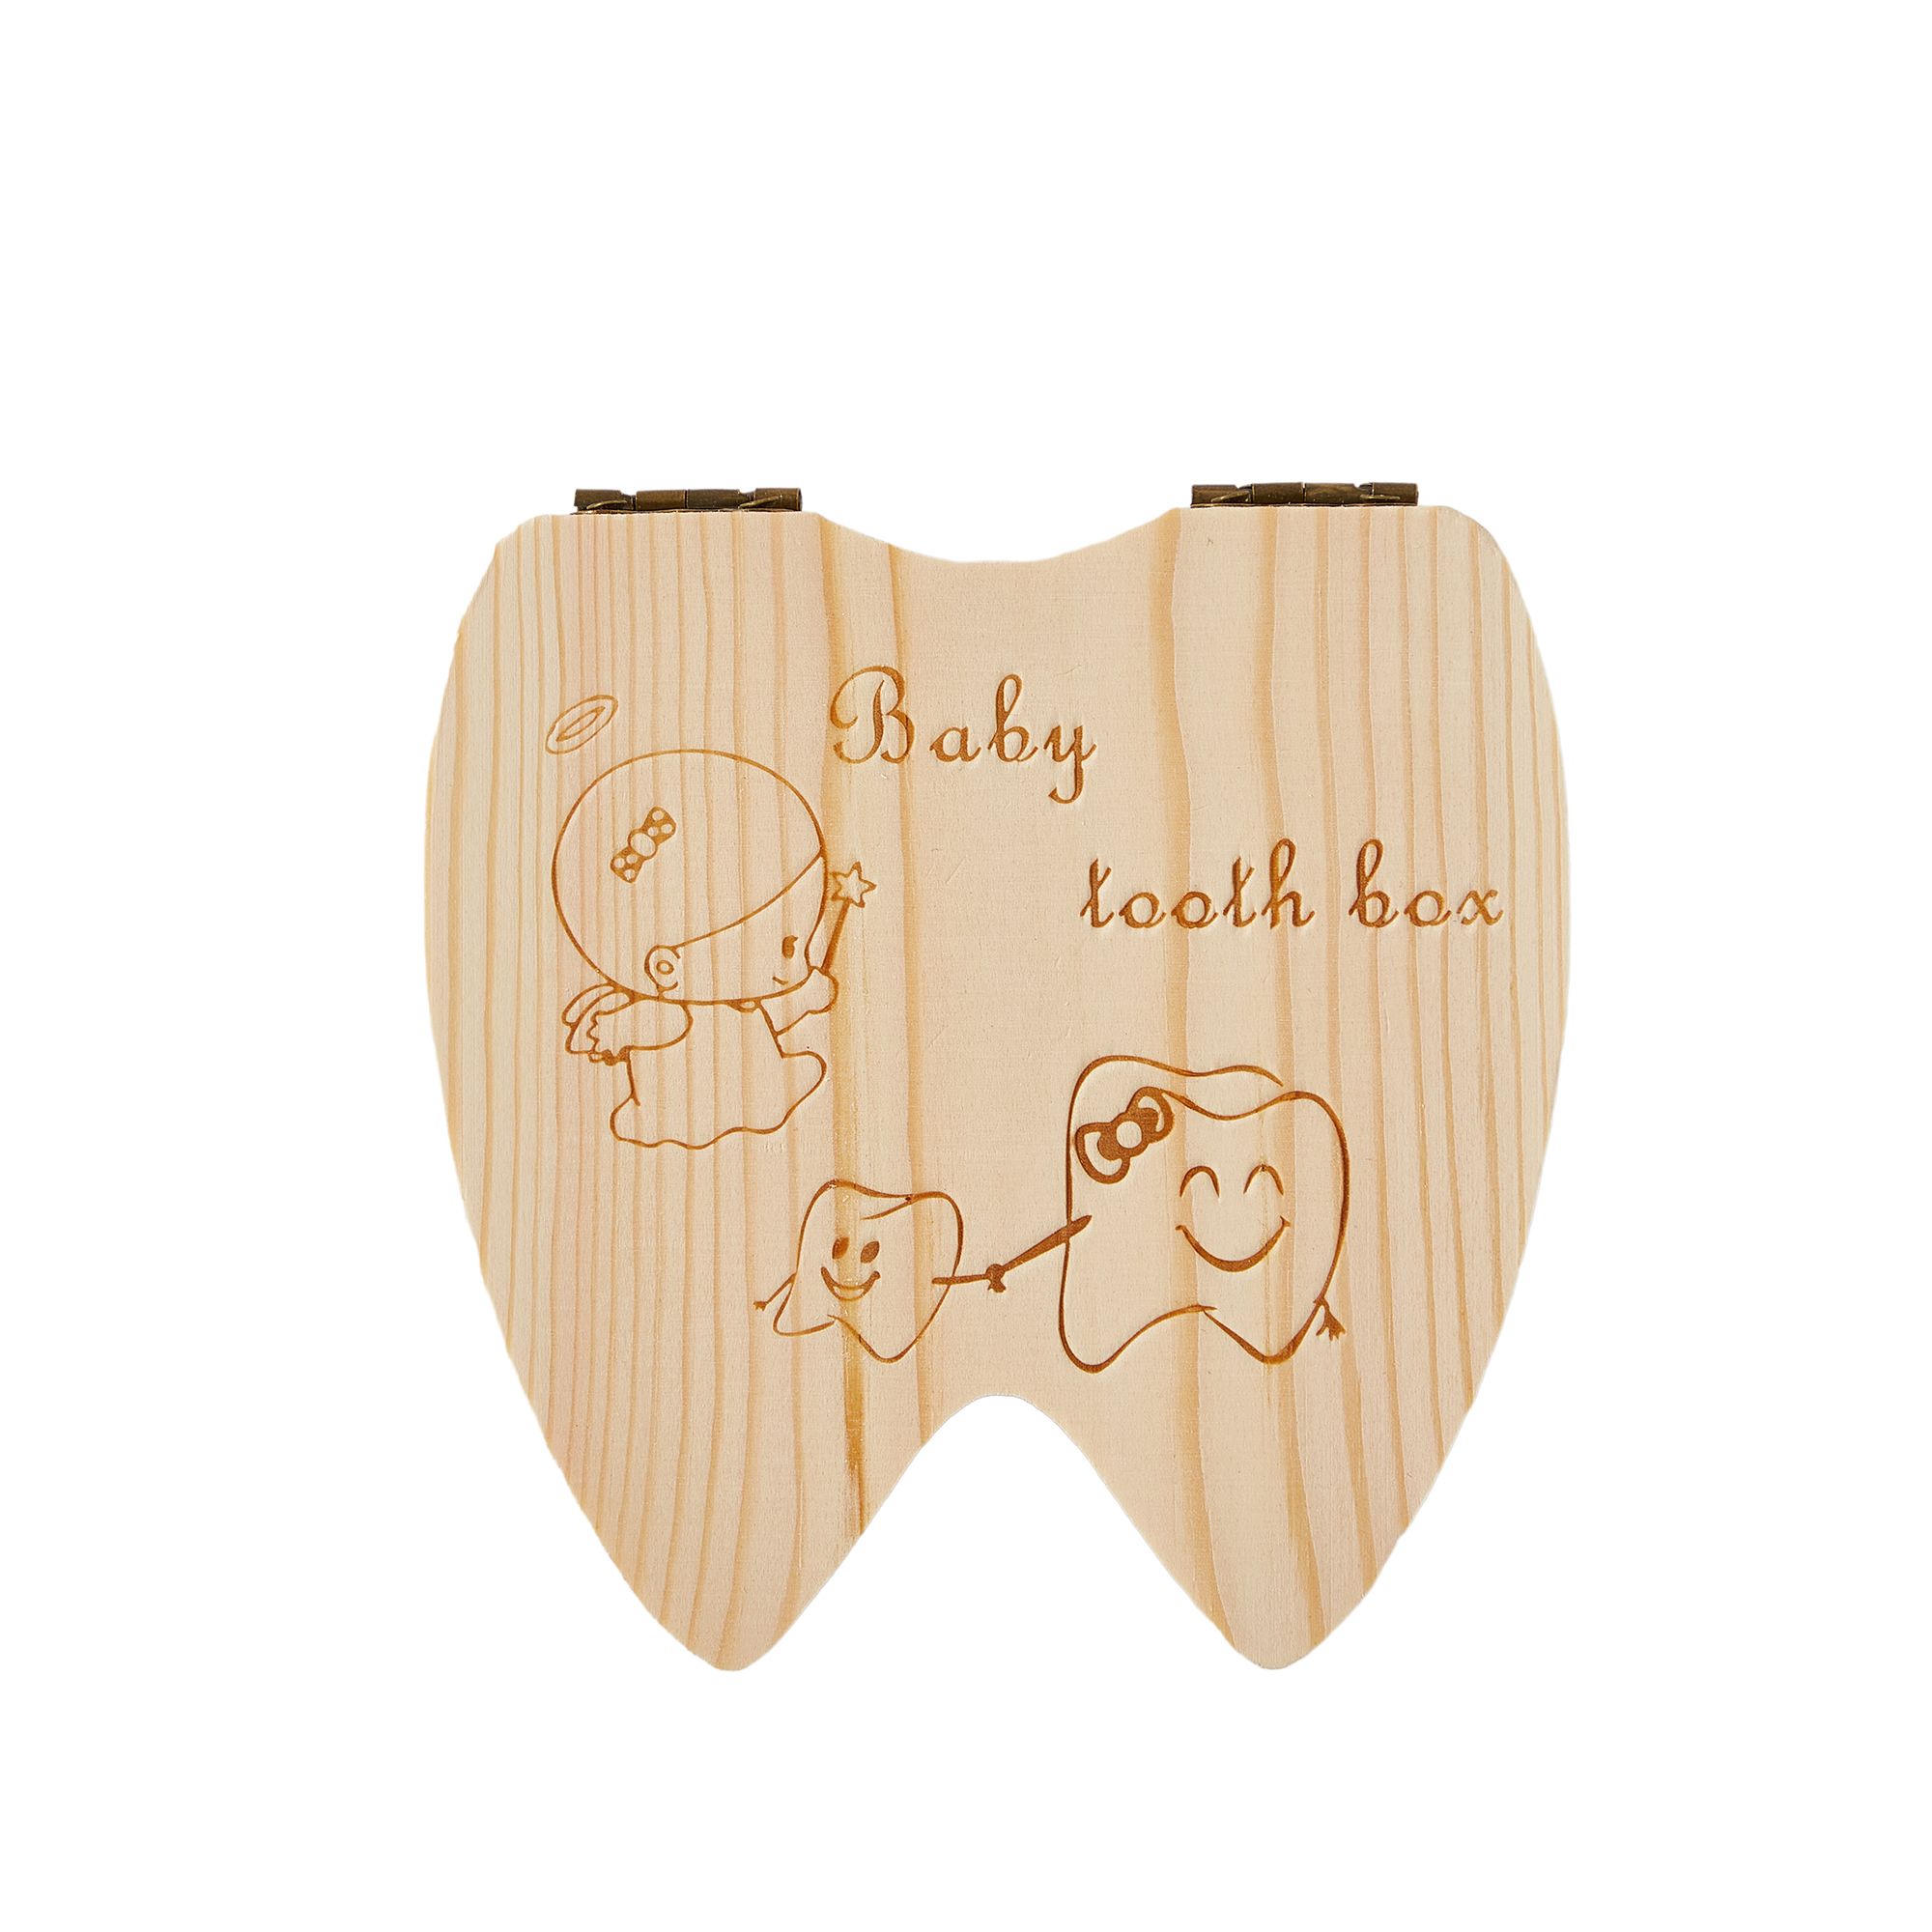 Single Unit Colorful Wooden Baby Teeth Keepsake Box With Flip Lid For Hair, Teeth And Memories